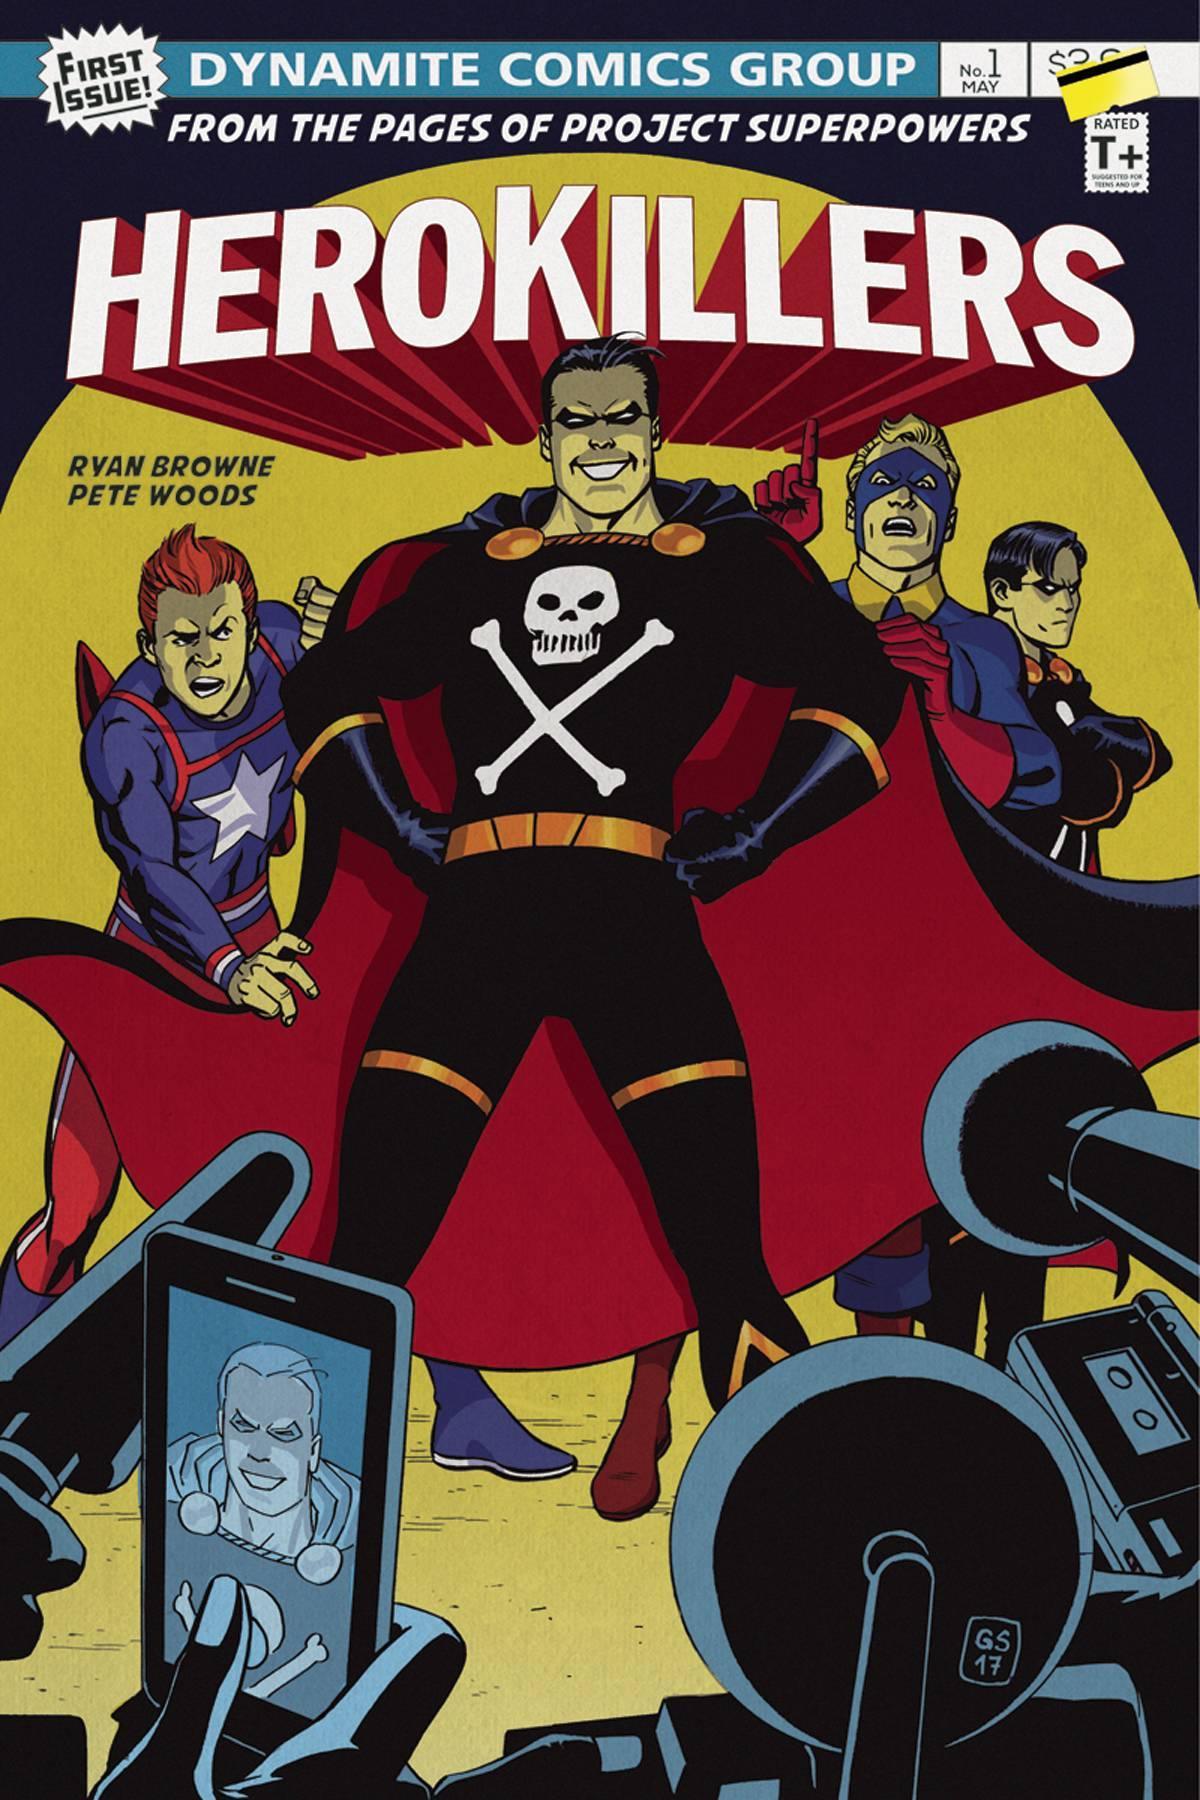 PROJECT SUPERPOWERS HERO KILLERS #1 15 COPY INCV - Kings Comics